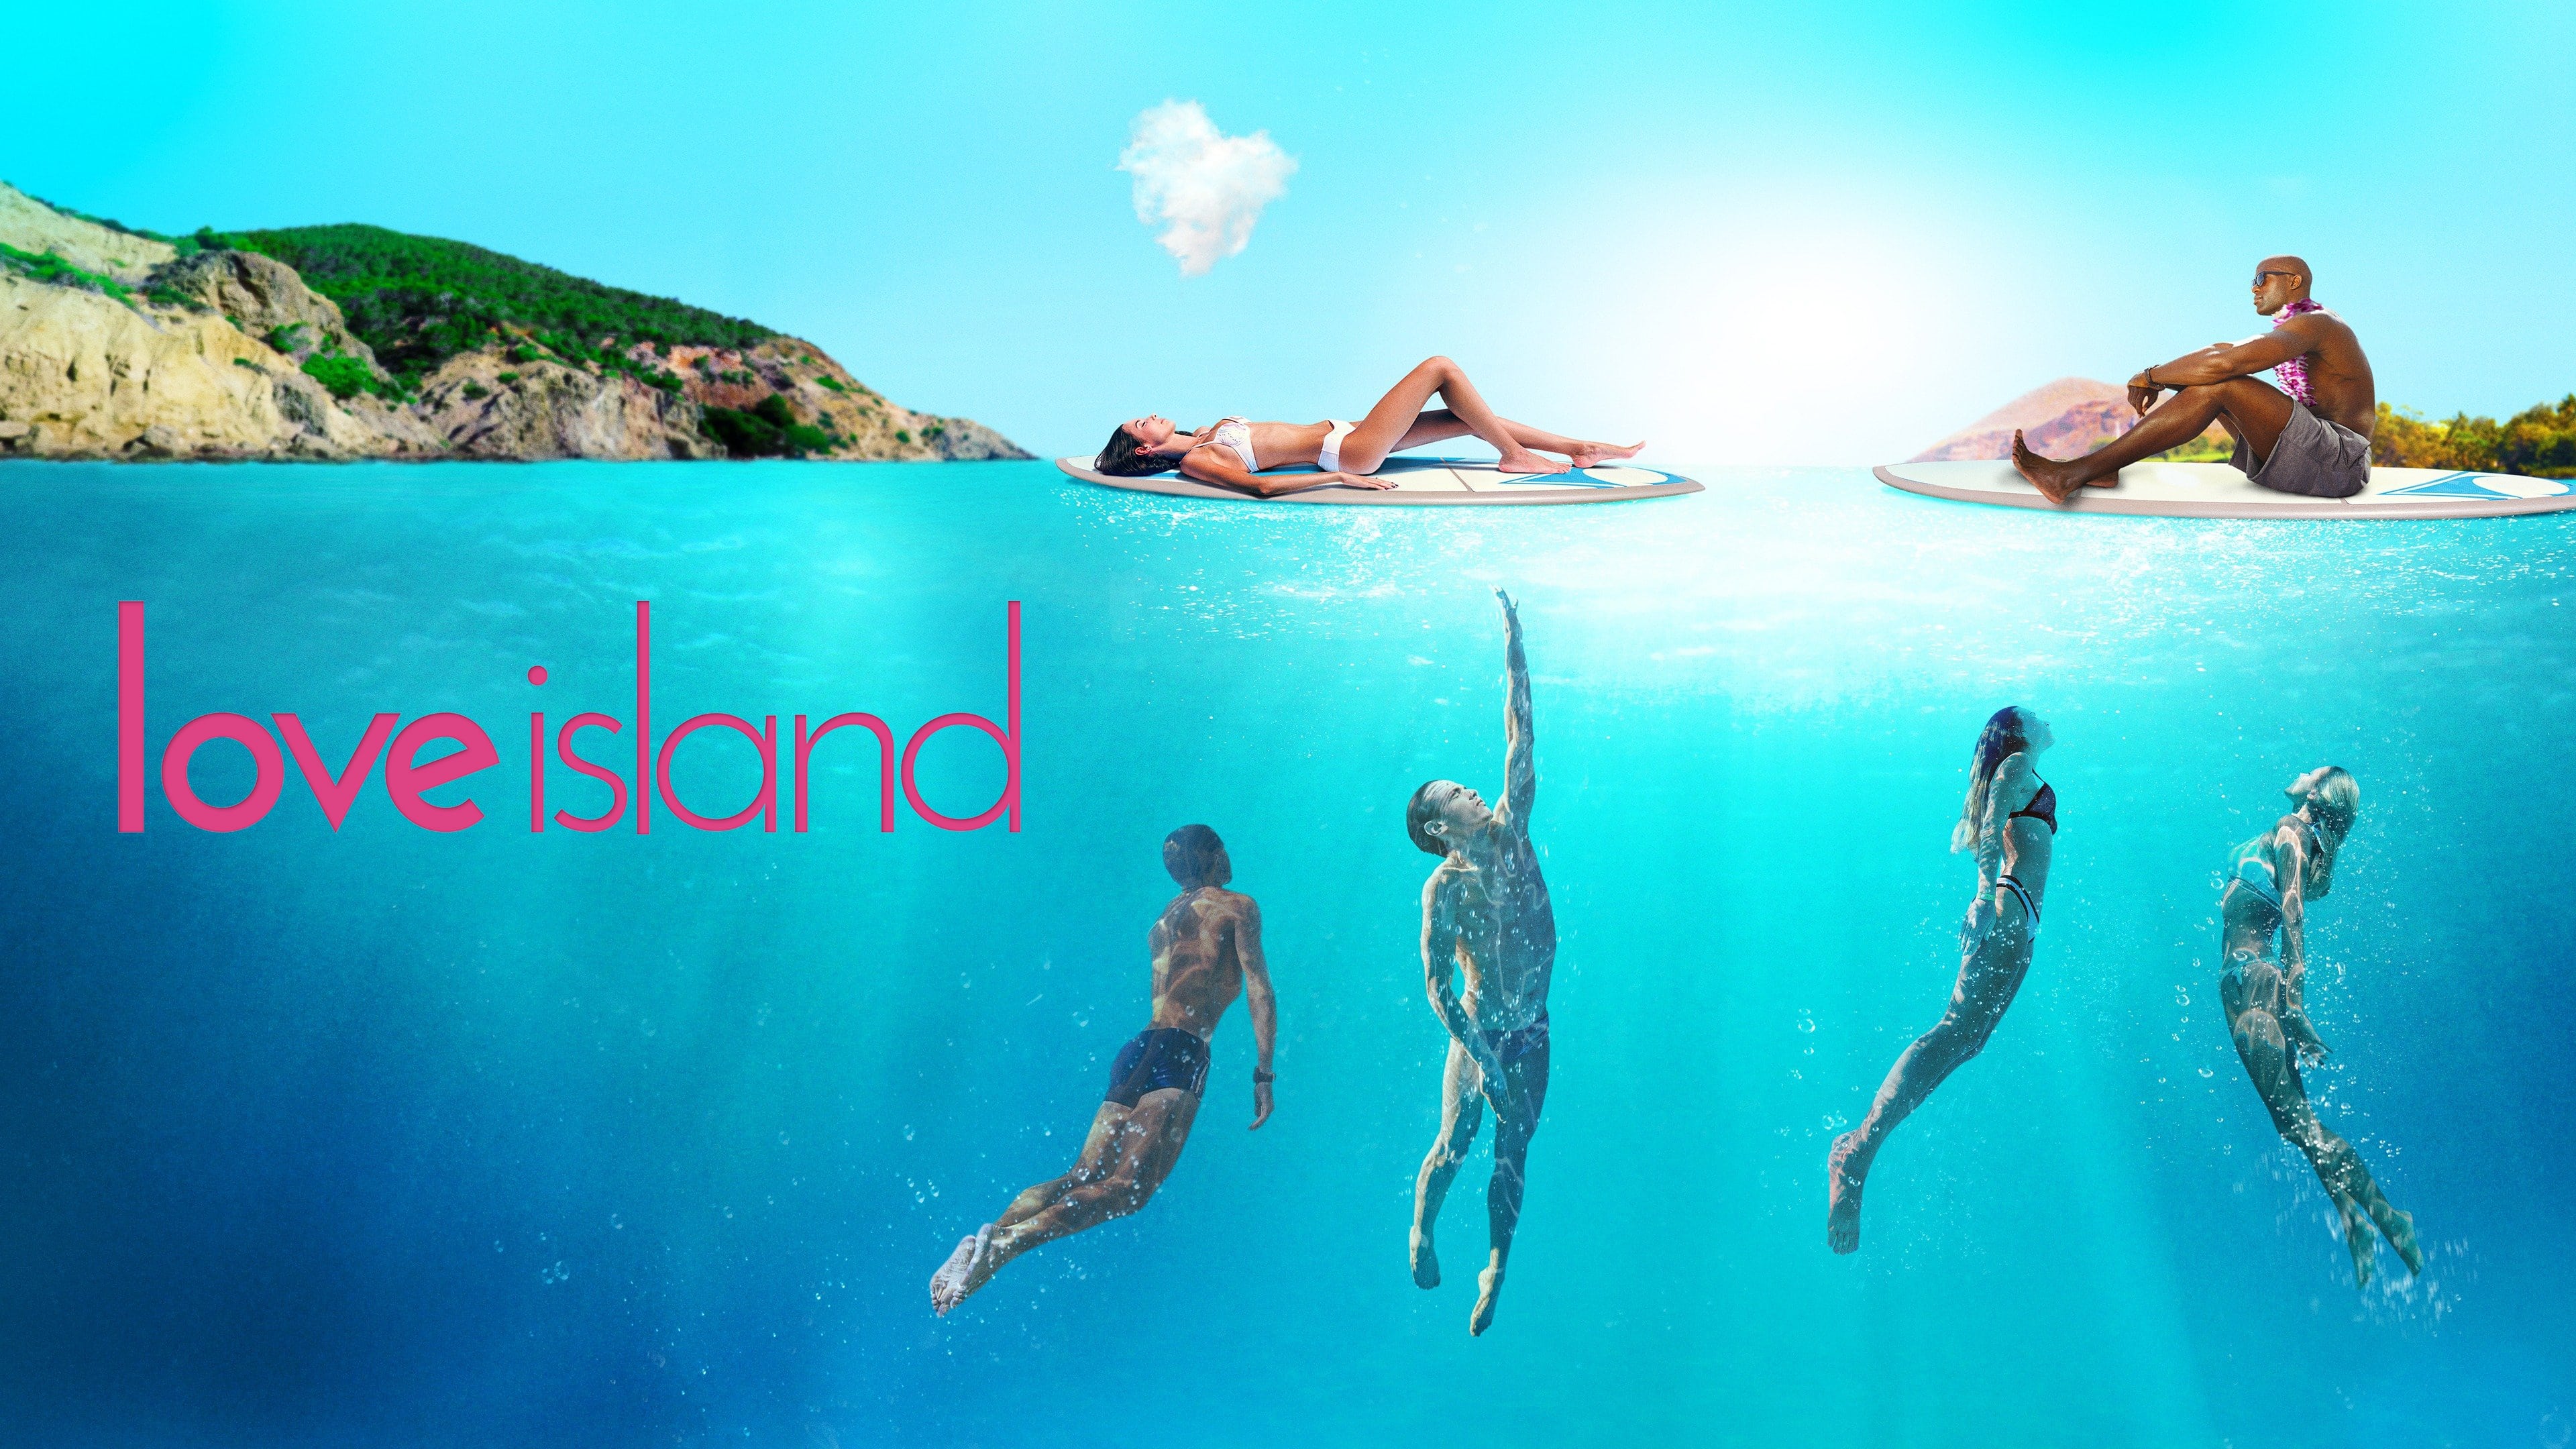 Love Island - Season 4 Episode 2